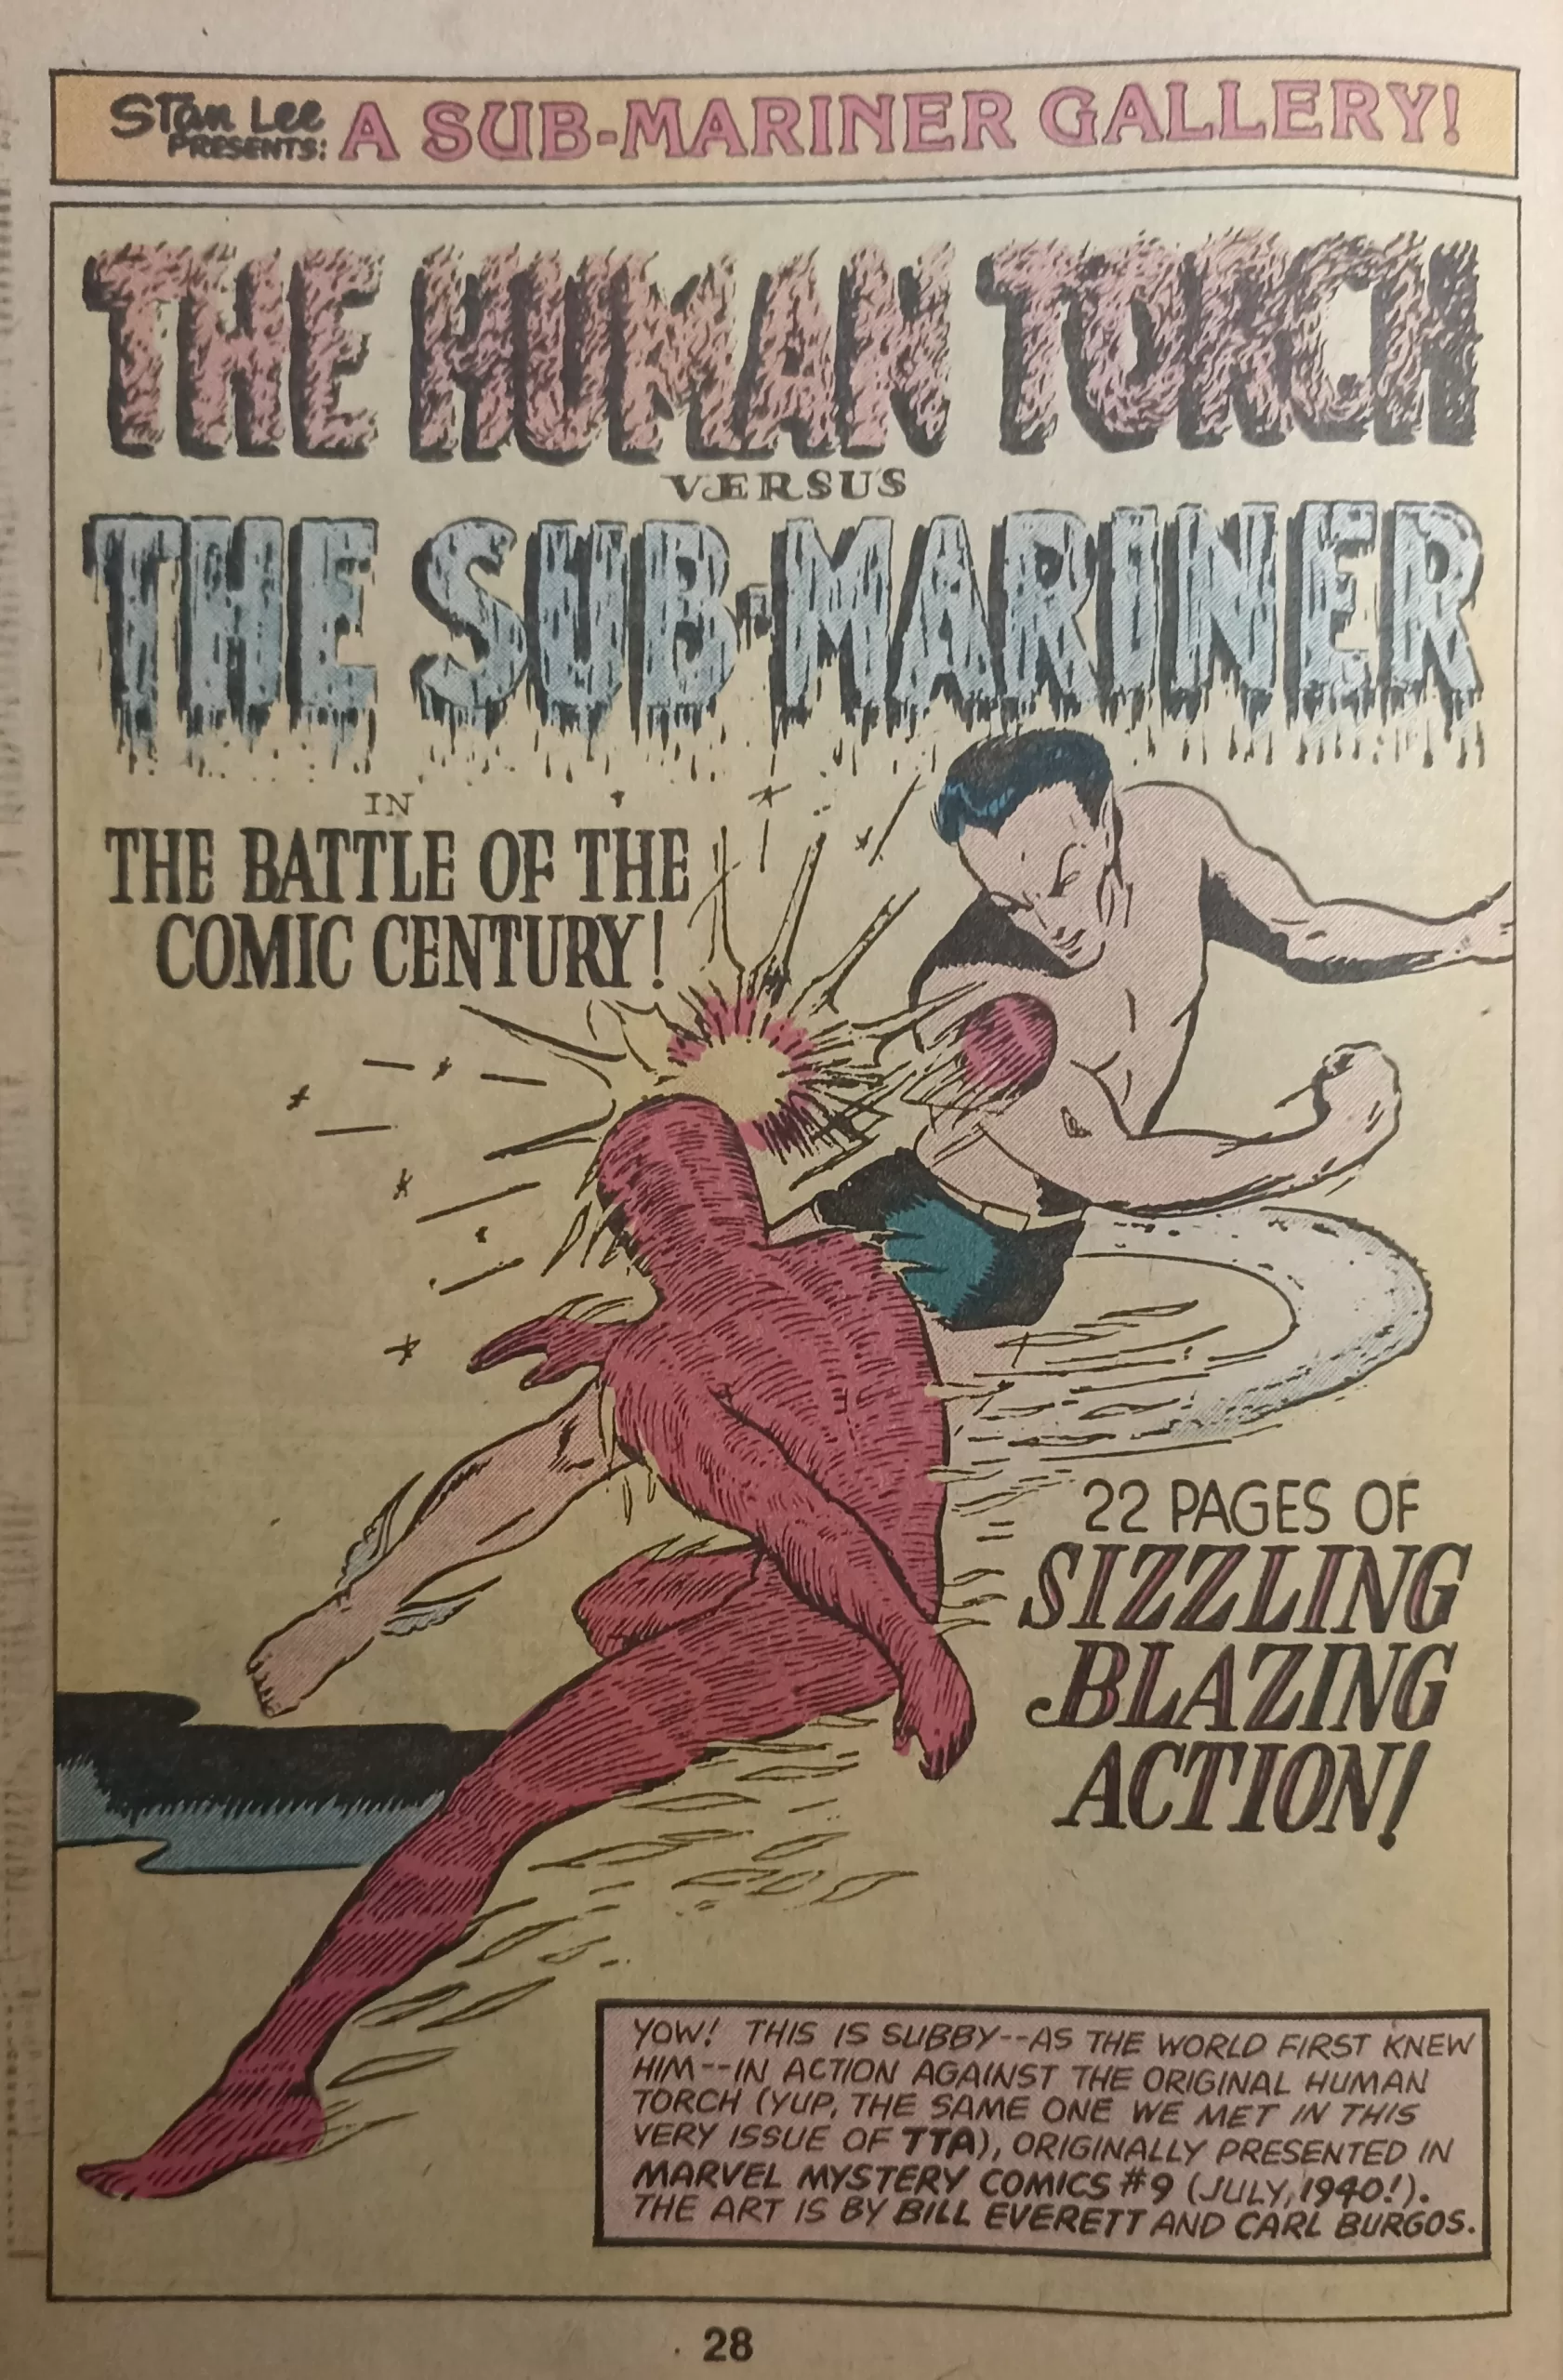 Sub-Mariner vs. The Original Human Torch, 1940